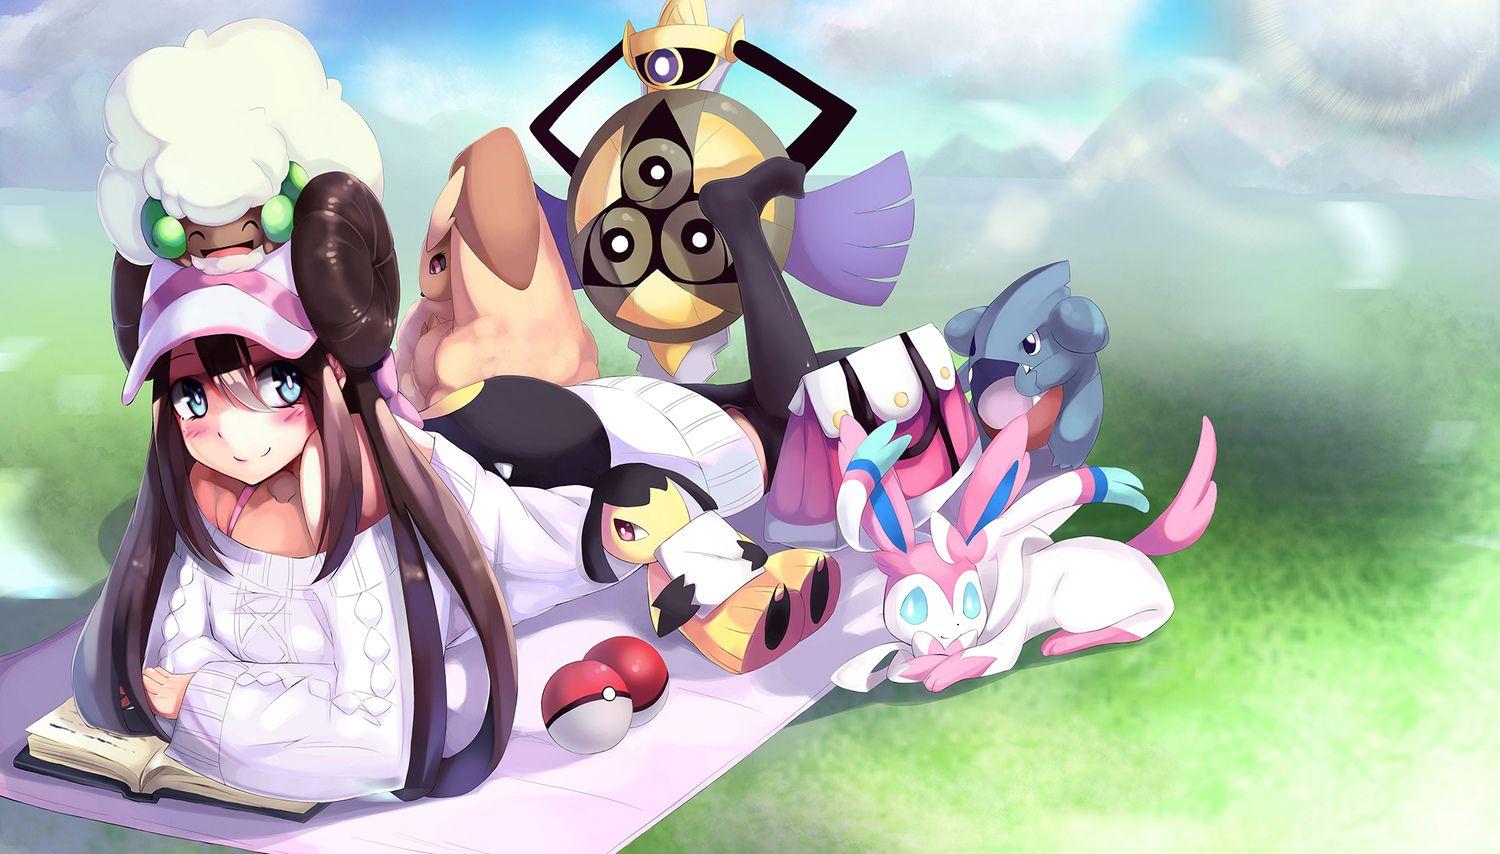 Aegislash (Pokémon) HD Wallpaper and Background Image